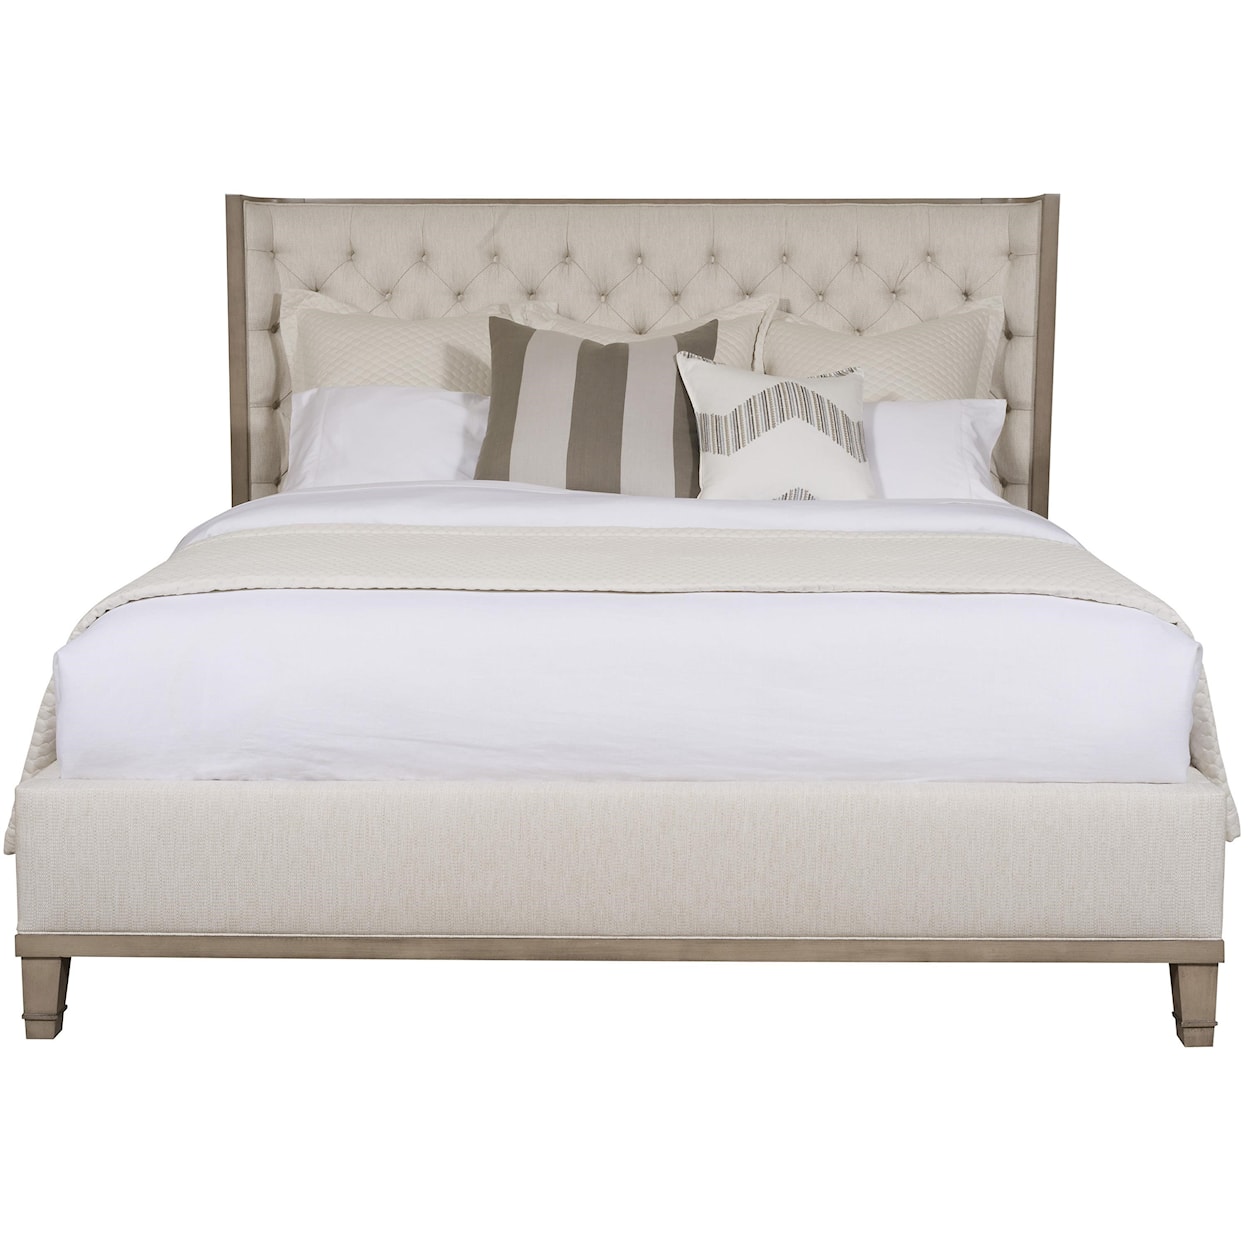 Vanguard Furniture Bowers King Bed